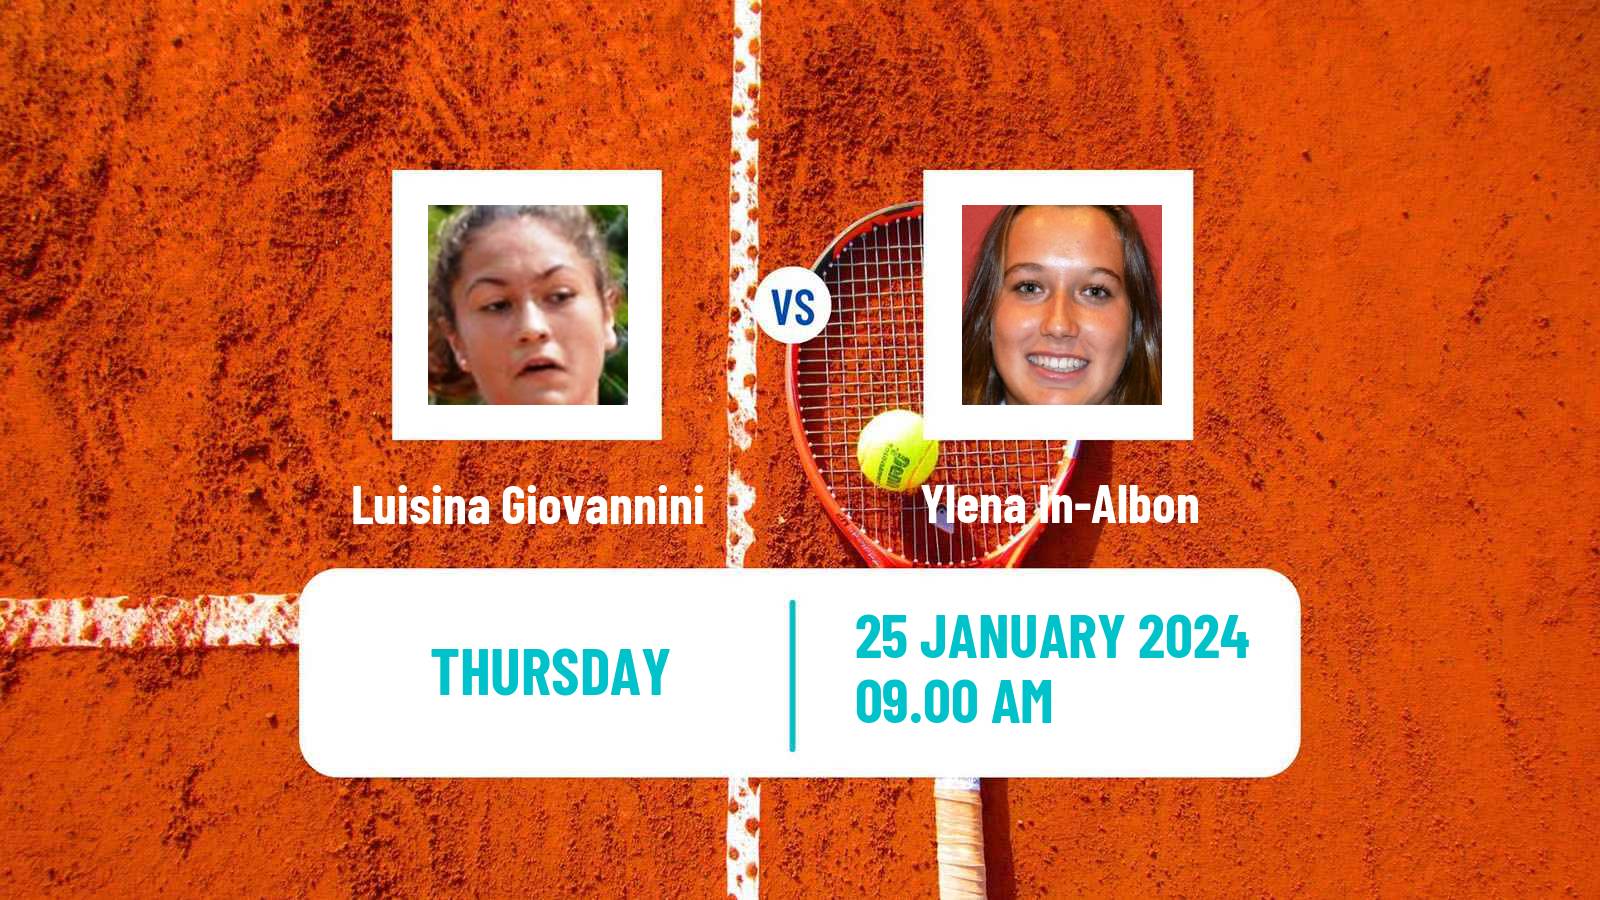 Tennis ITF W35 Buenos Aires 2 Women Luisina Giovannini - Ylena In-Albon